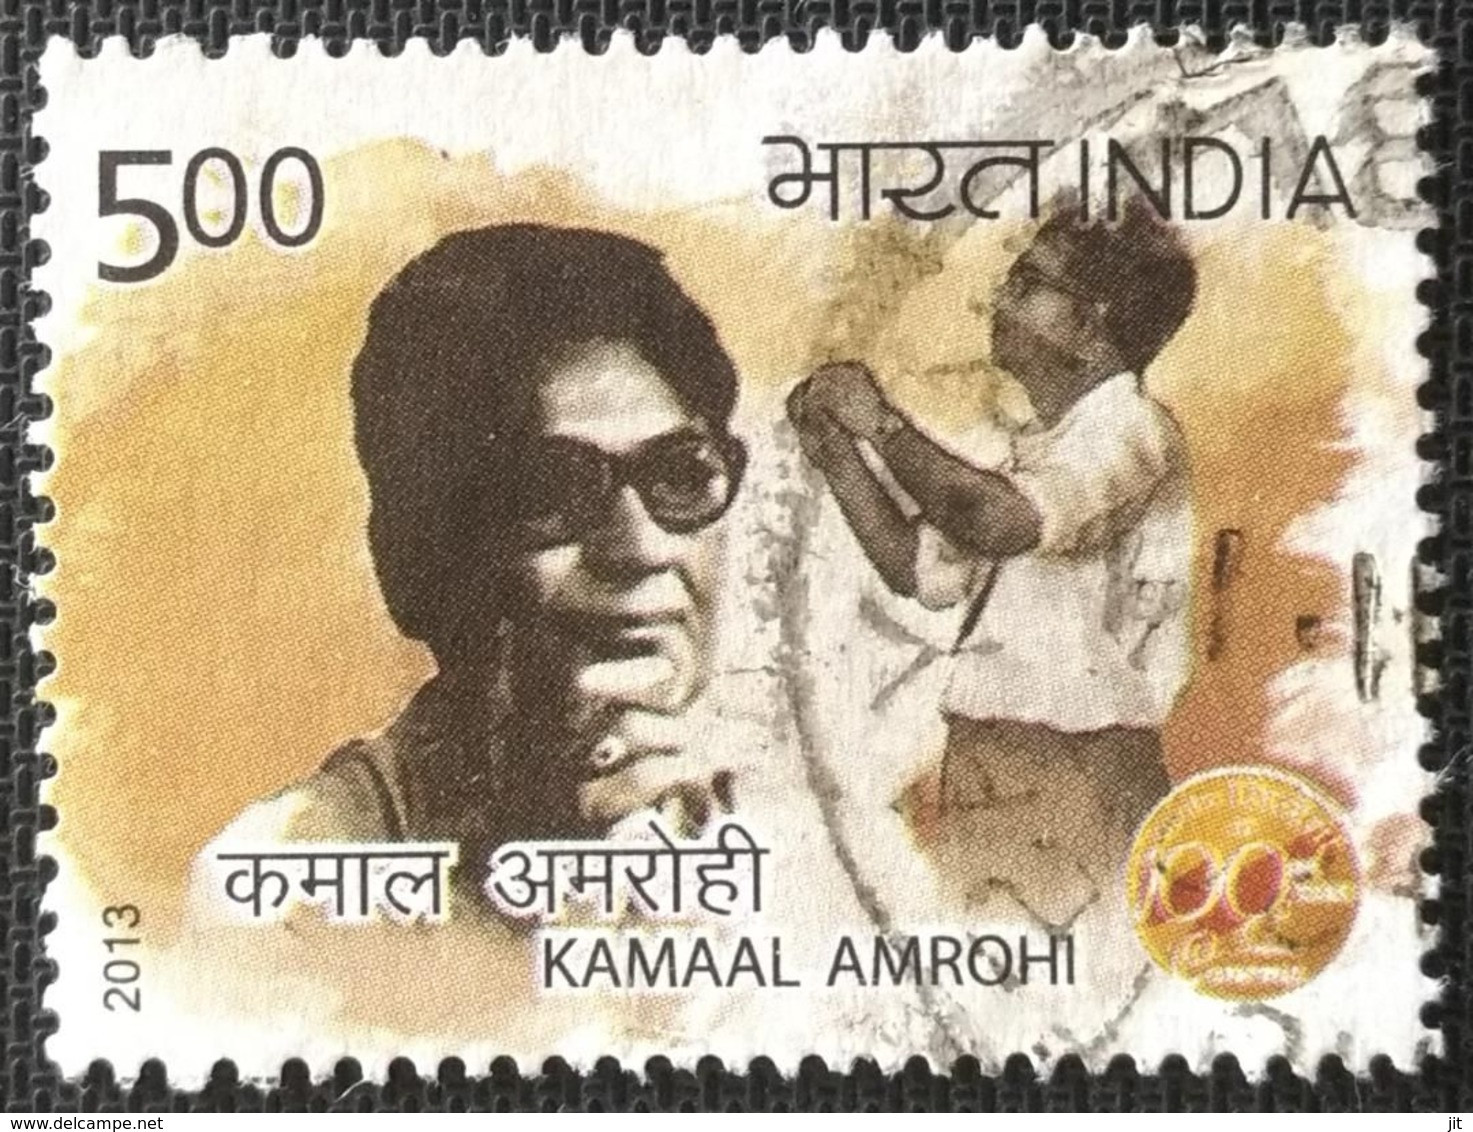 022. INDIA 2013 USED STAMP 100 YEARS OF INDIAN CINEMA (KAMAAL AMROHI) - Used Stamps